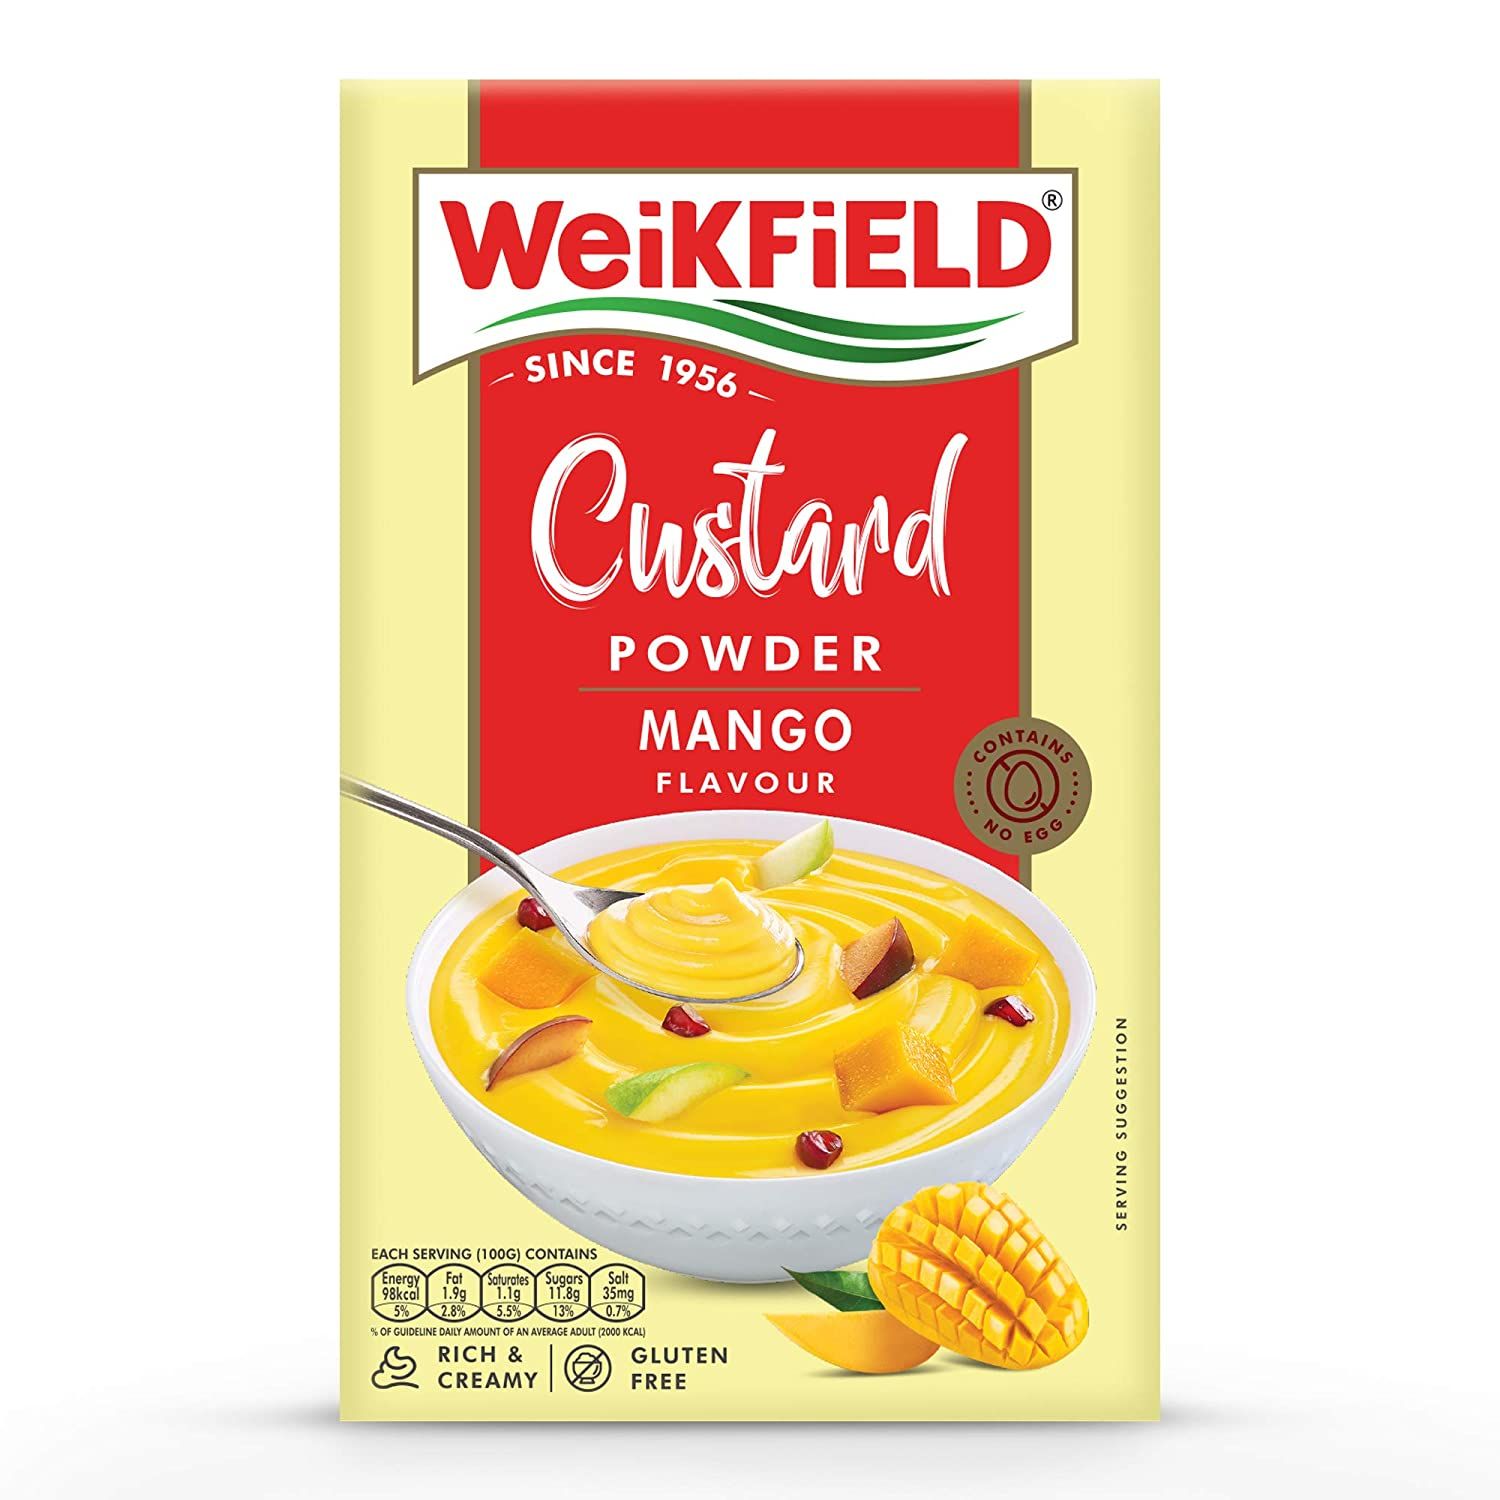 Weikfield Custard Powder Mango Image